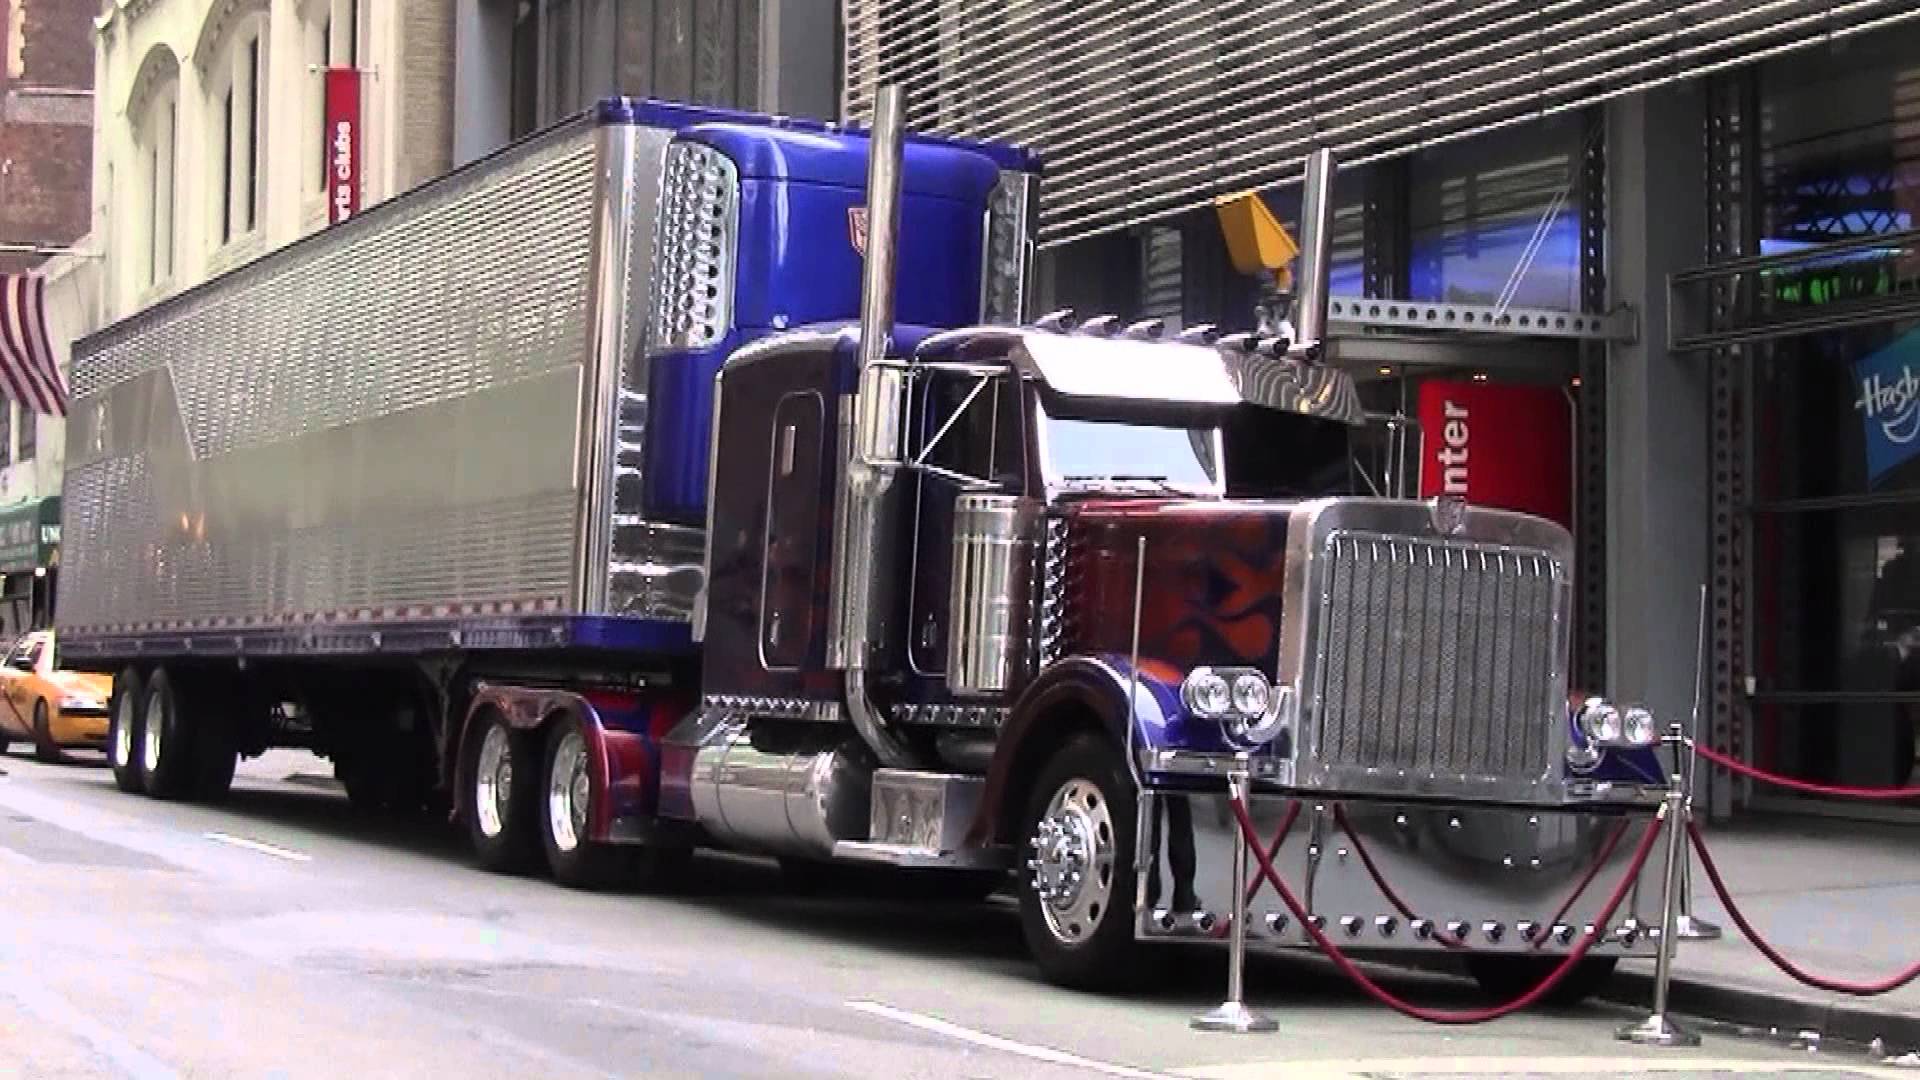 Transformers Optimus Prime truck